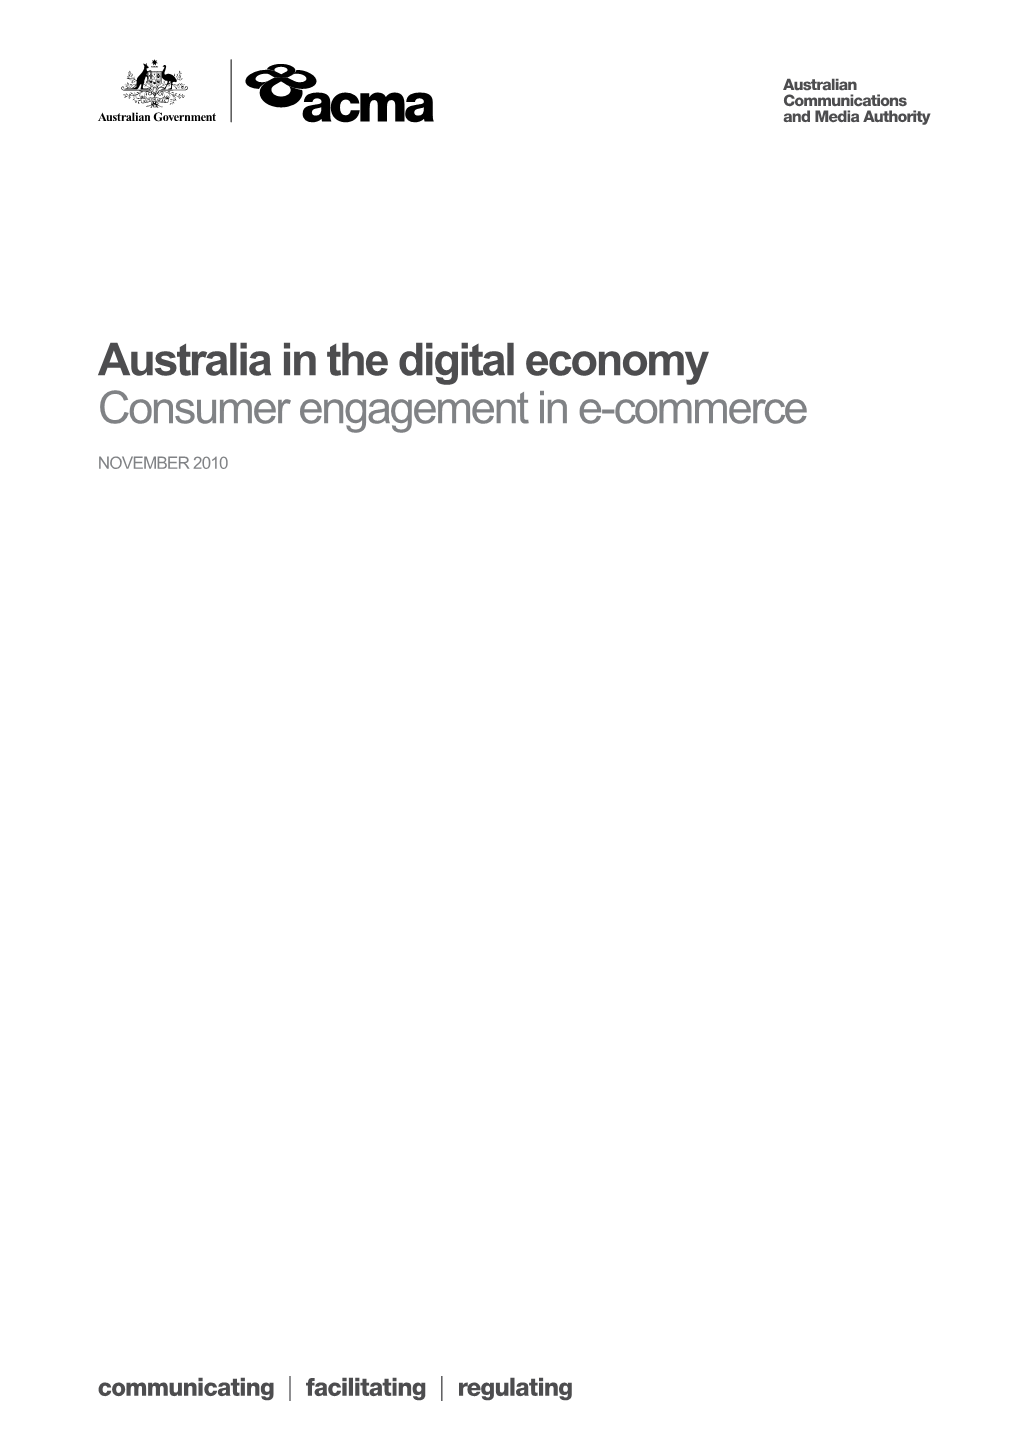 Australia in the Digital Economy - Consumer Engagement in E-Commerce